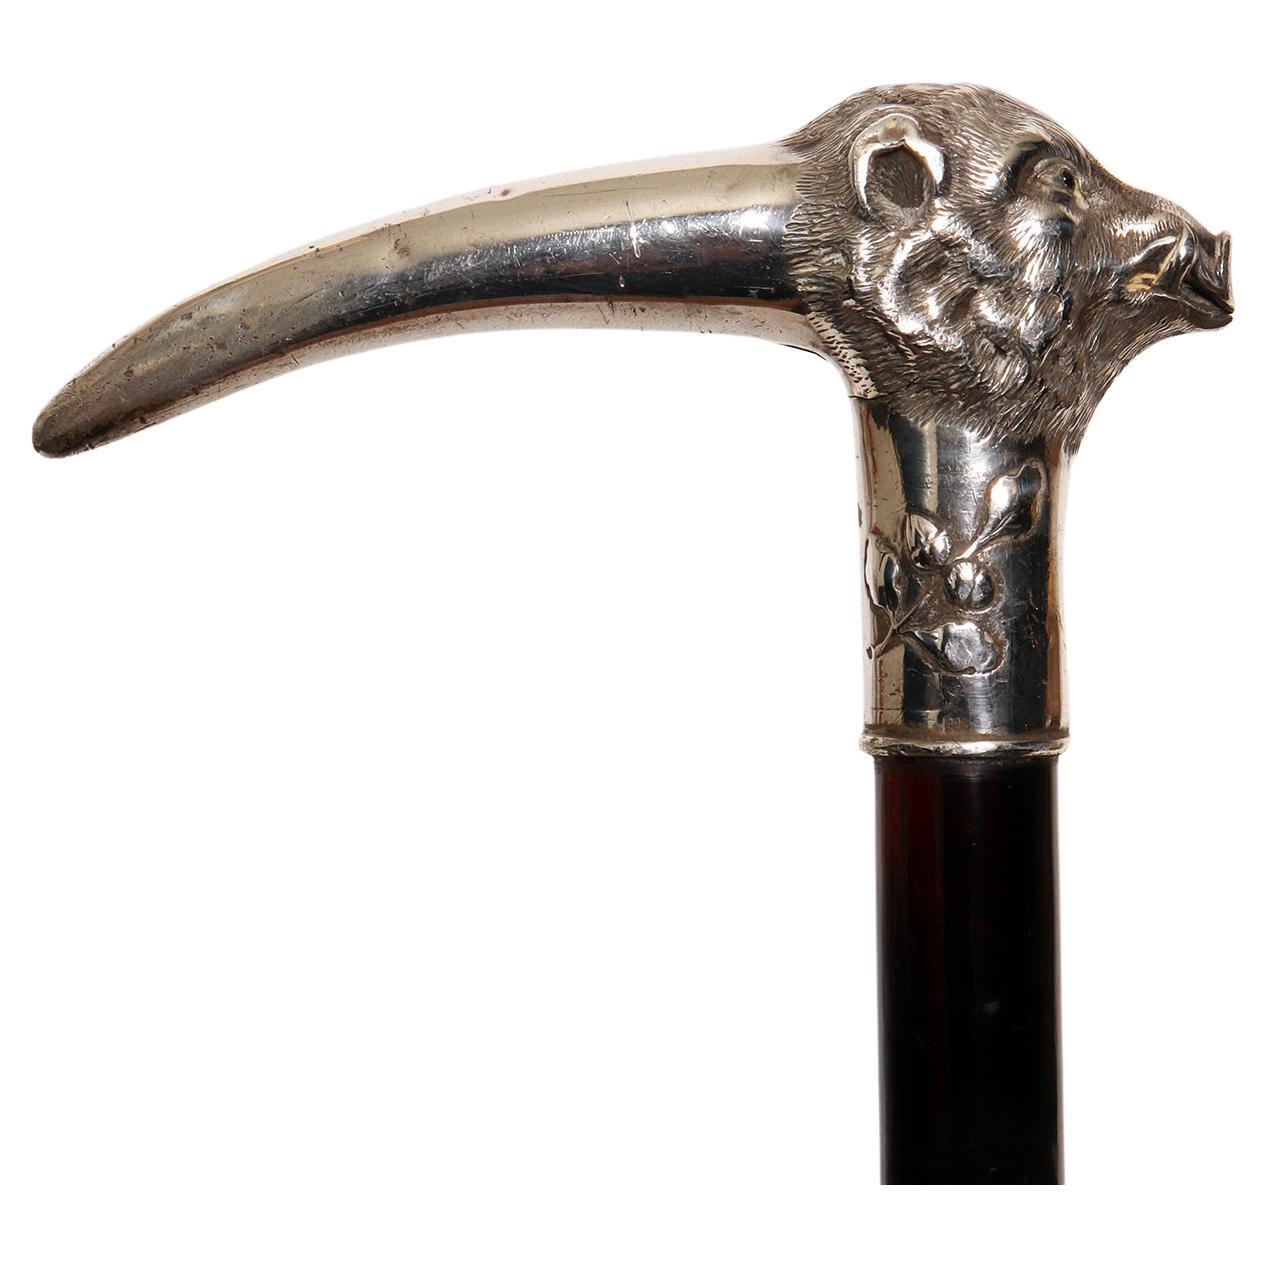 Walking stick: silver handle, depicting a boar’s head with acorns and leaves. glass paste eyes. Ebony wood shaft. Metal ferrule. Germany circa 1900.

